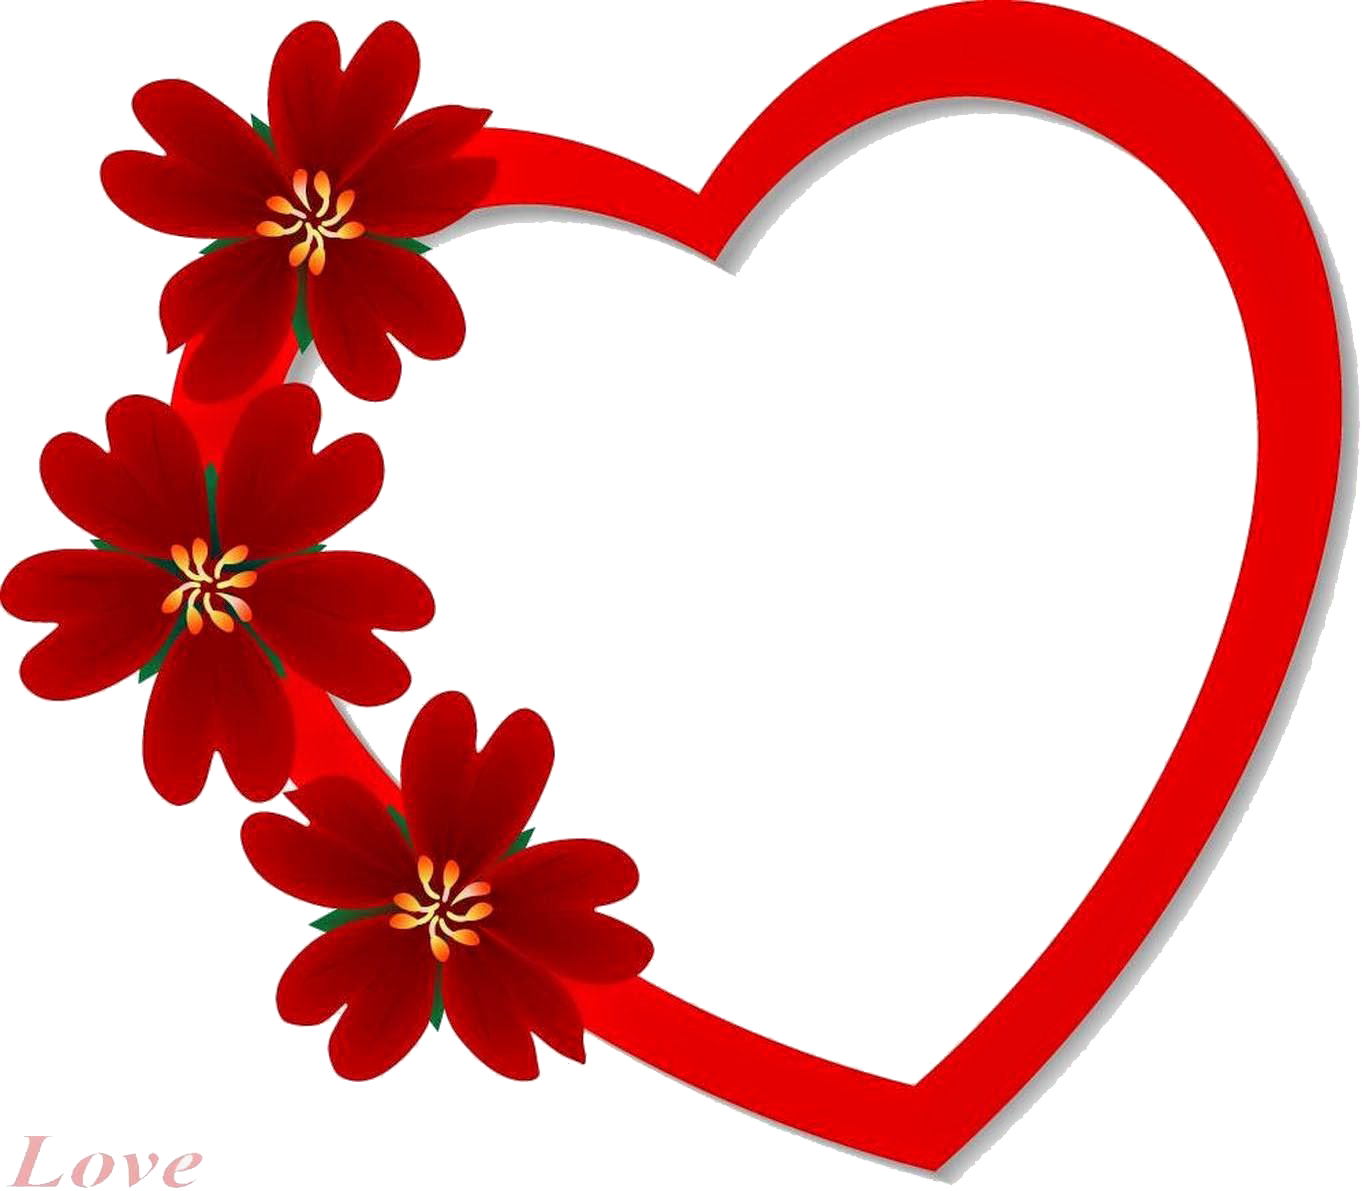 Heart Frame PNG Background Image